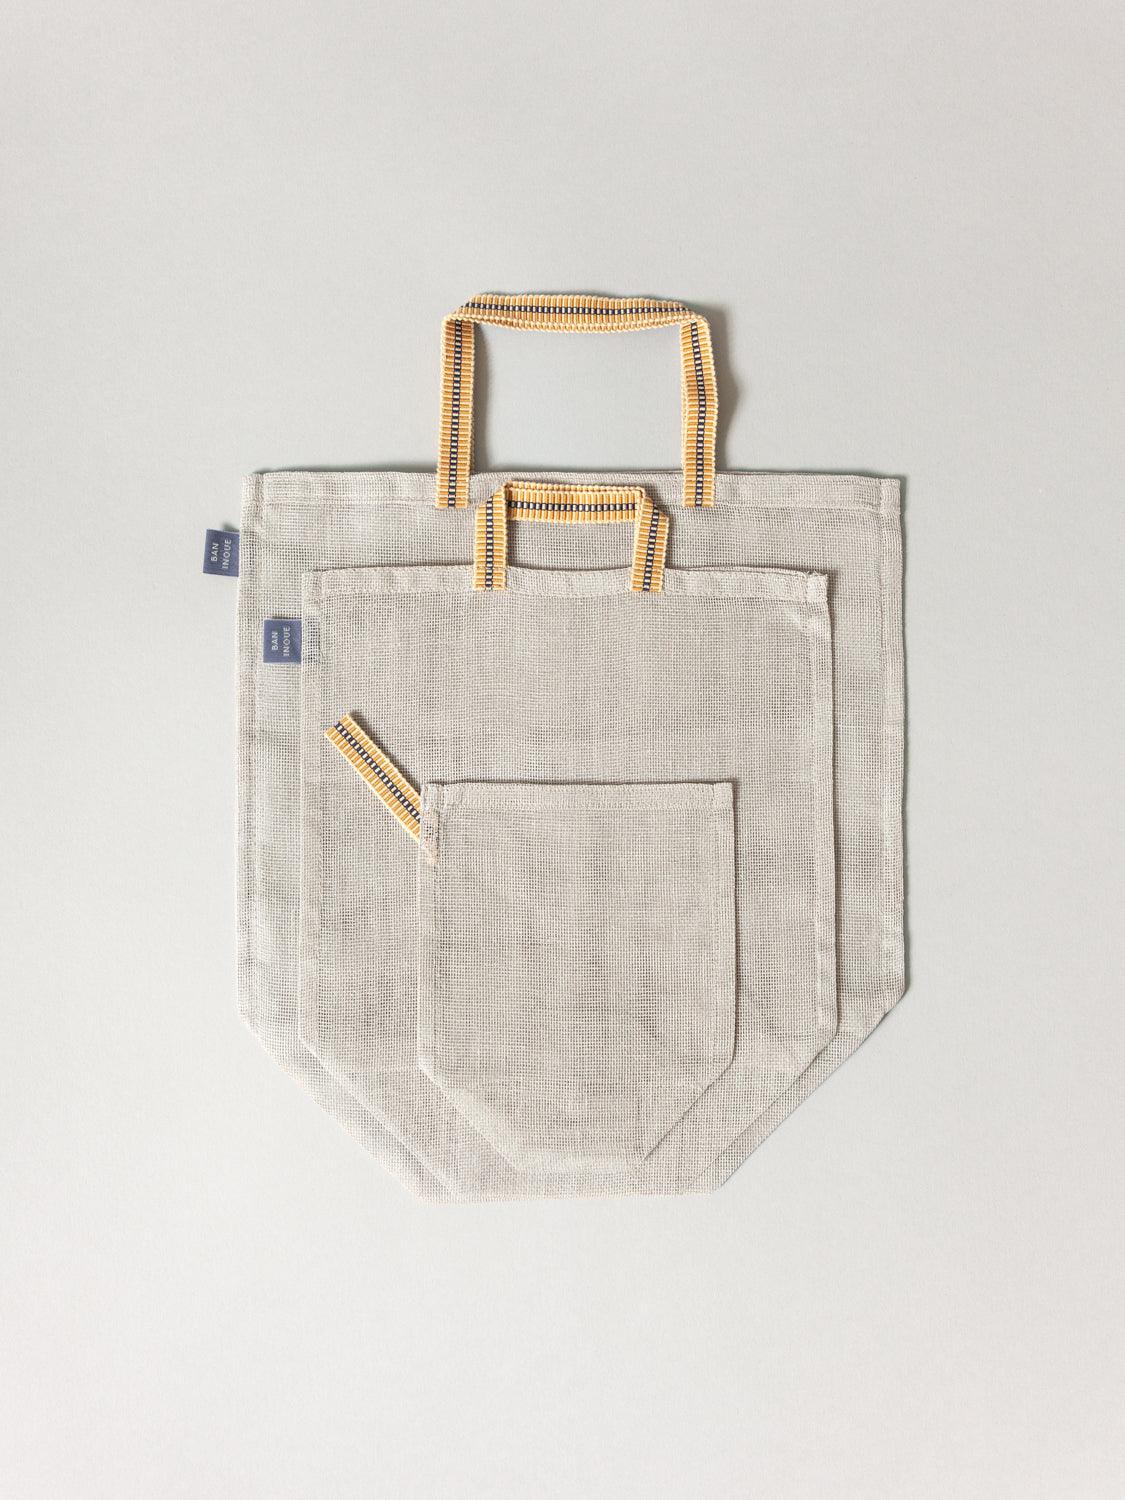 Uashmama Drawstring Laundry Bag, 9 Colors, Paper, Cotton, Linen on